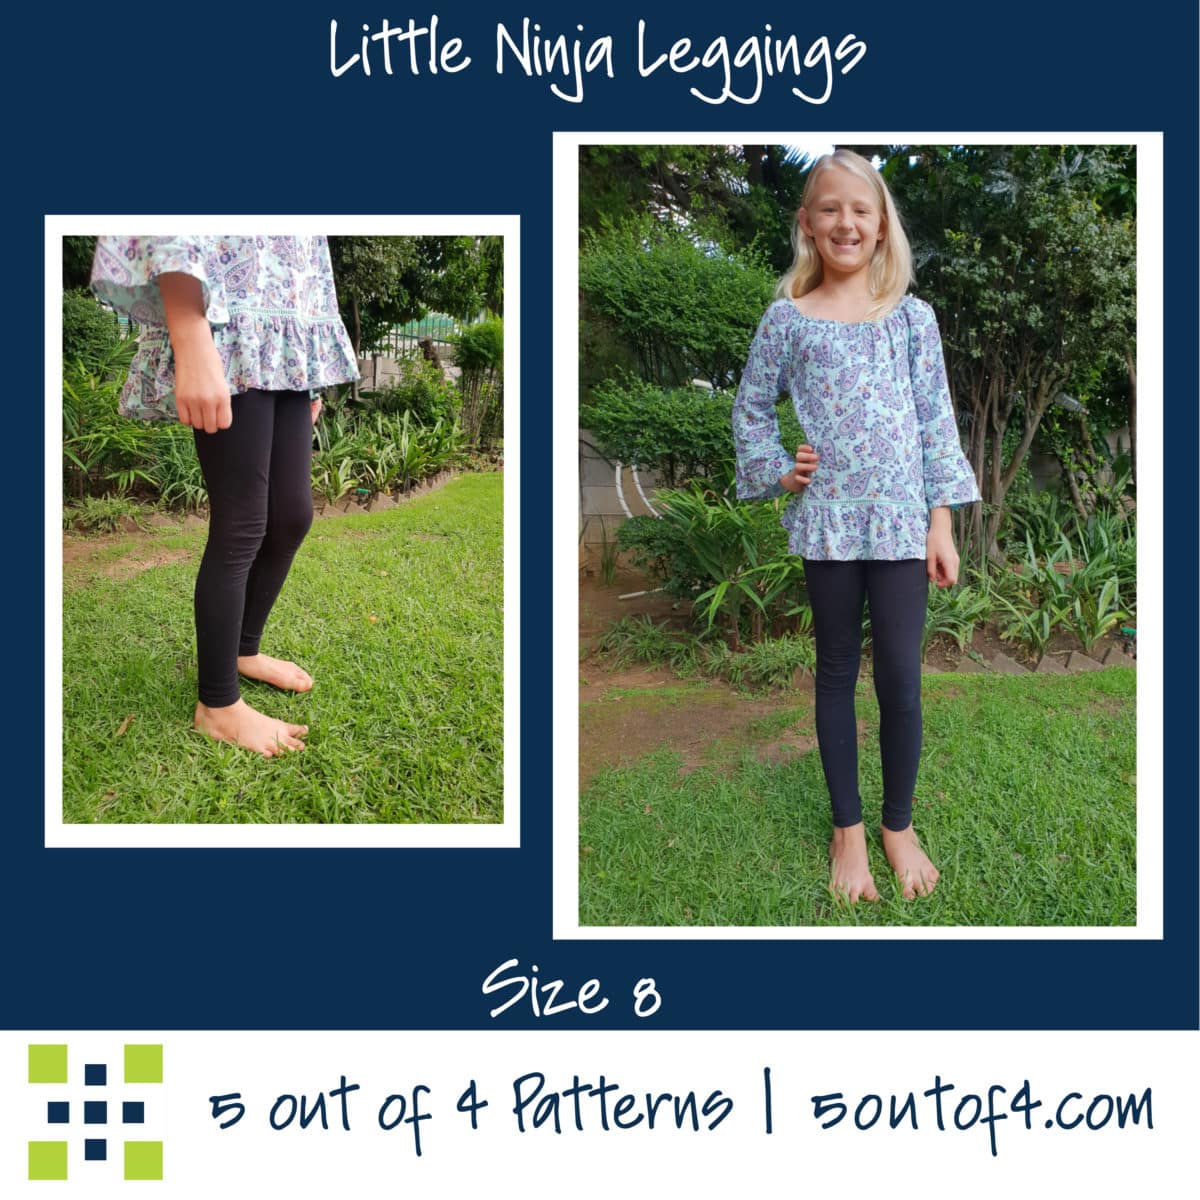 Little Ninja Leggings - 5 out of 4 Patterns